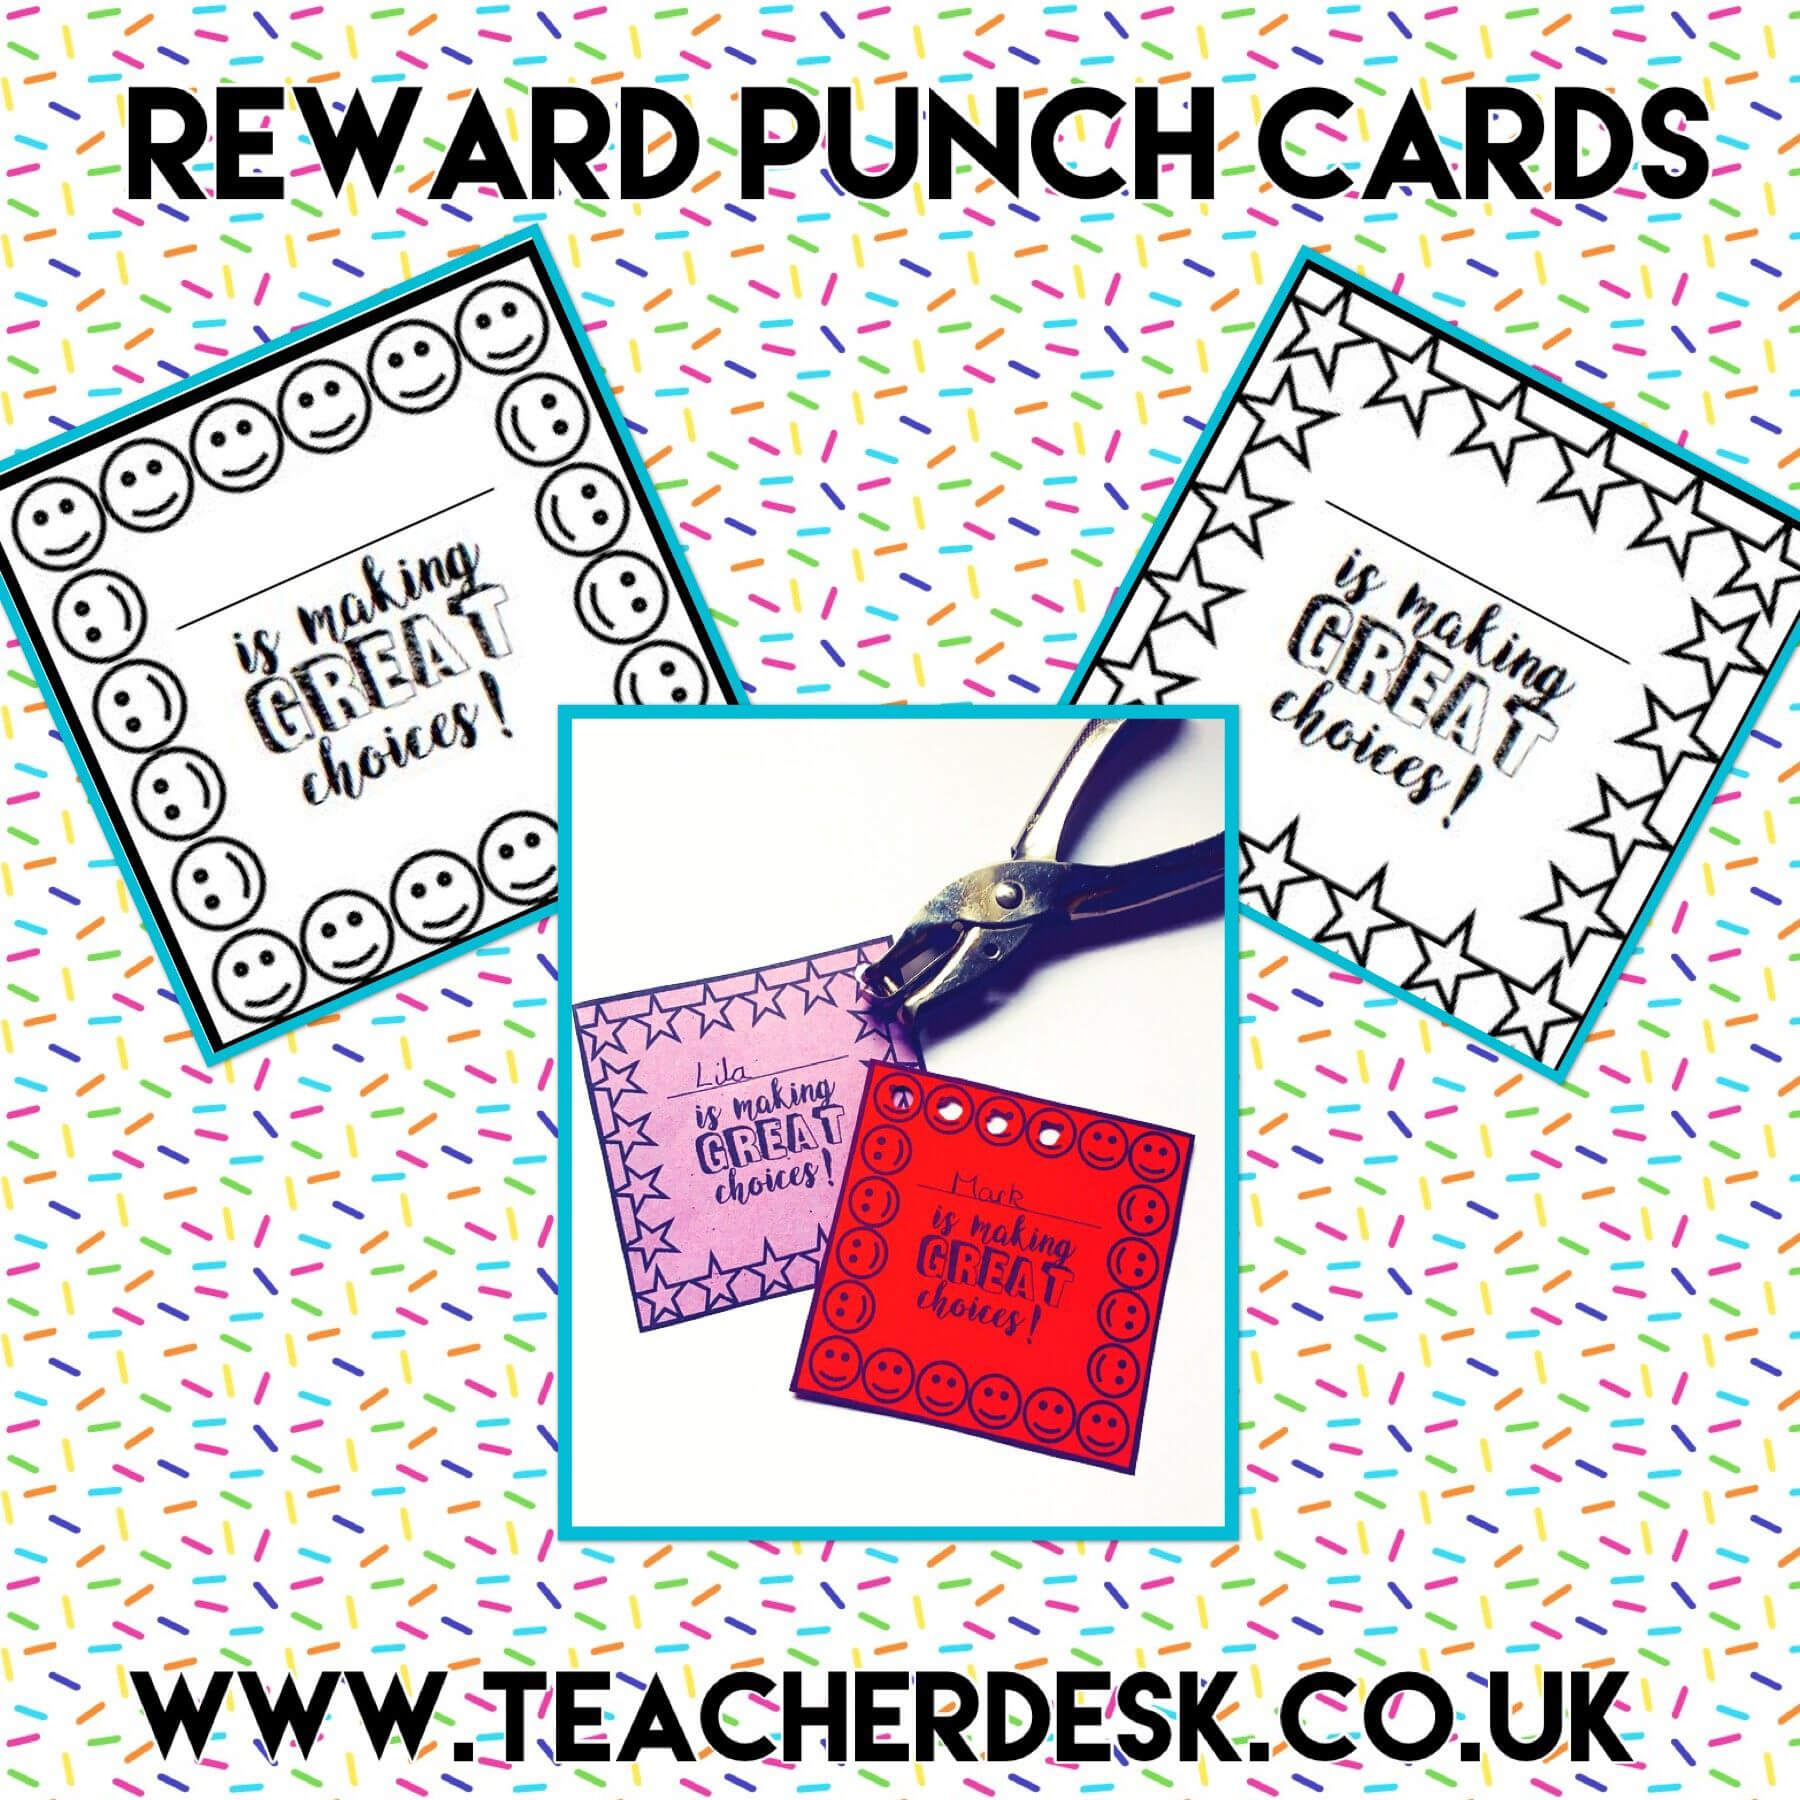 Reward Punch Cards Teacher Desk Www.teacherdesk.co.uk With Reward Punch Card Template